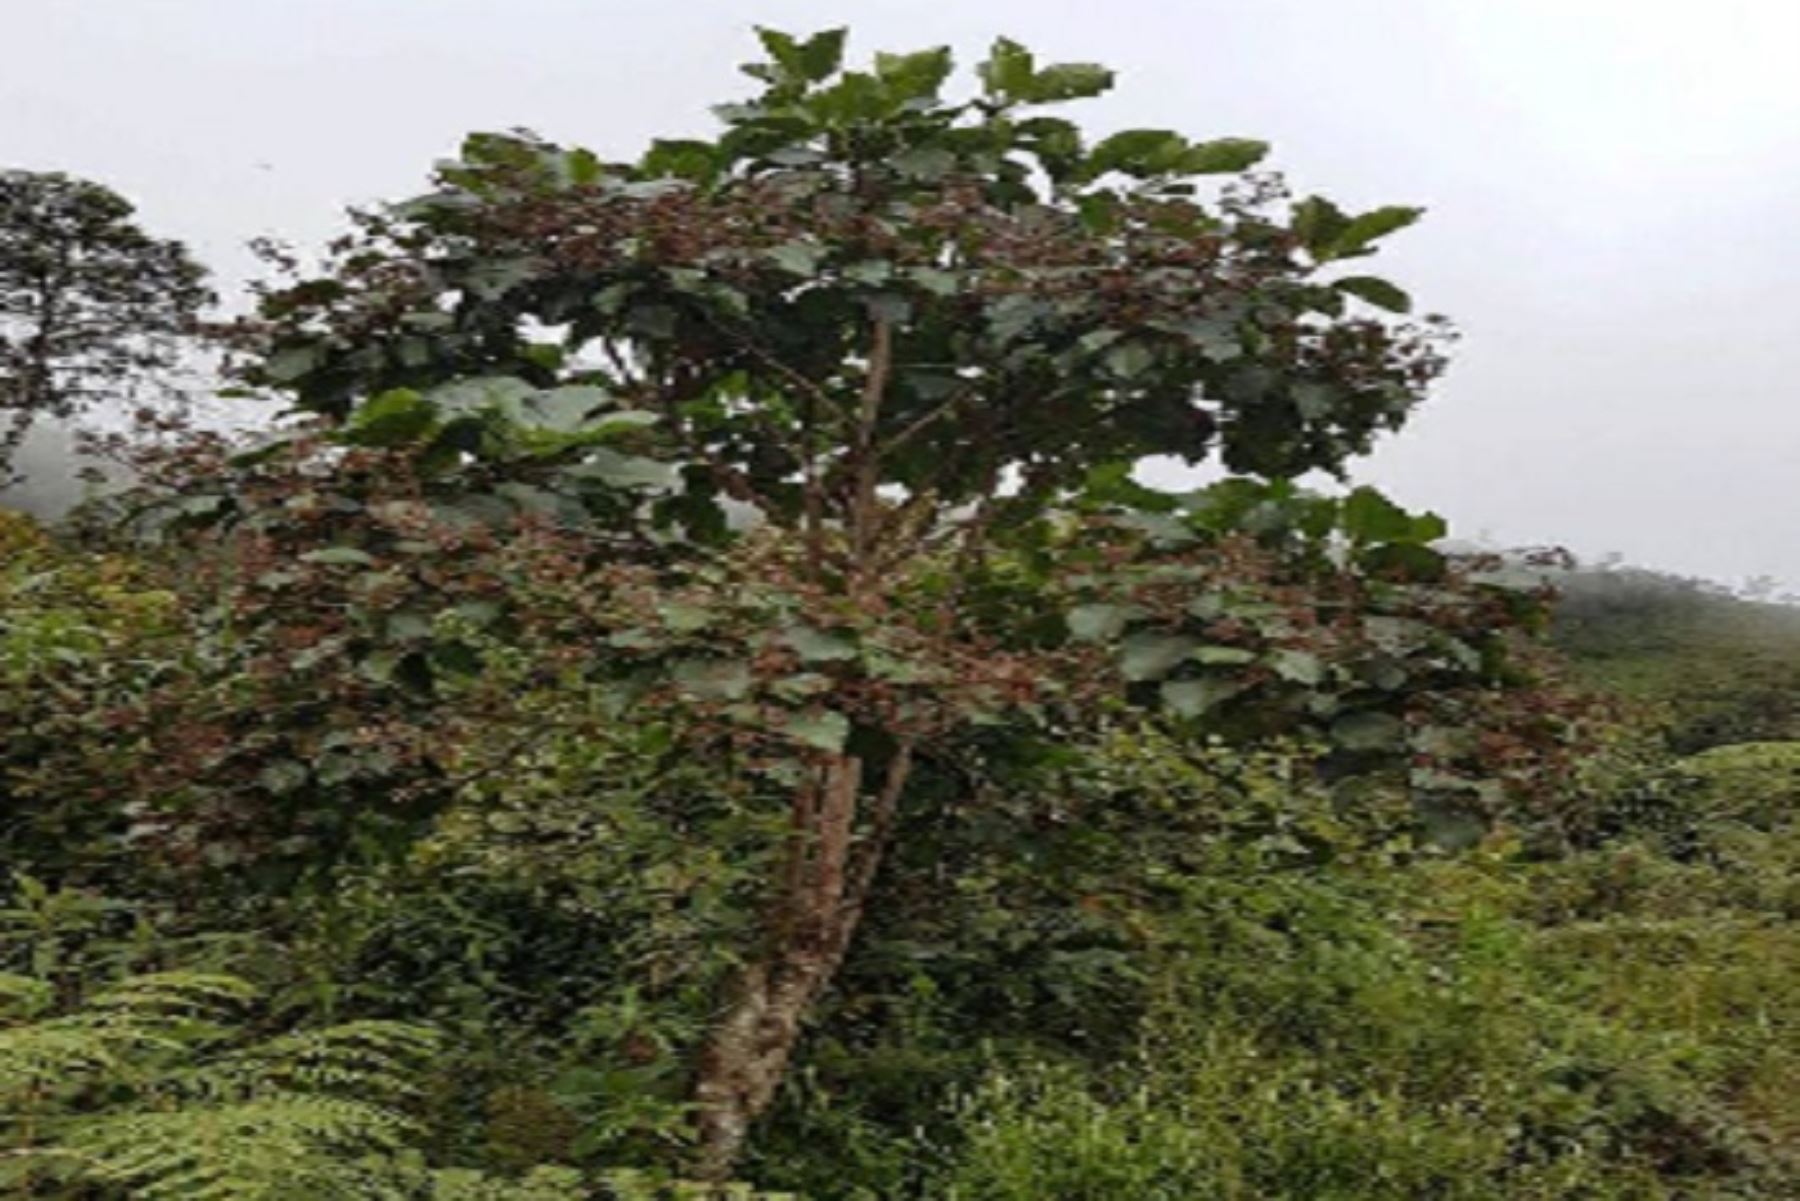 El árbol de la quina simboliza al reino vegetal y a la riqueza natural en el Escudo Nacional del Perú. ANDINA/Difusión